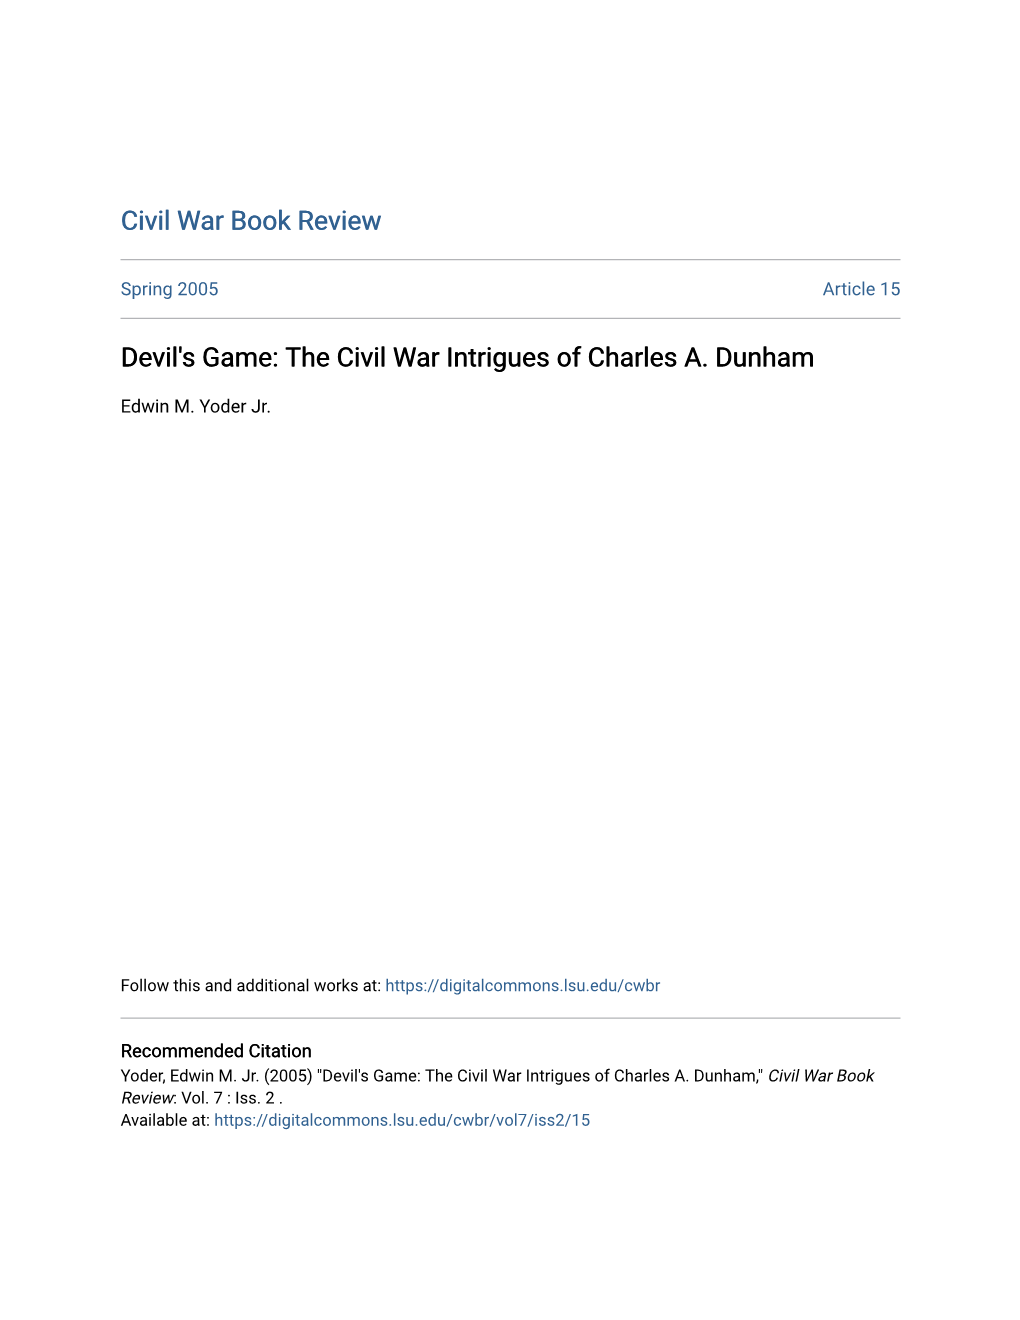 The Civil War Intrigues of Charles A. Dunham